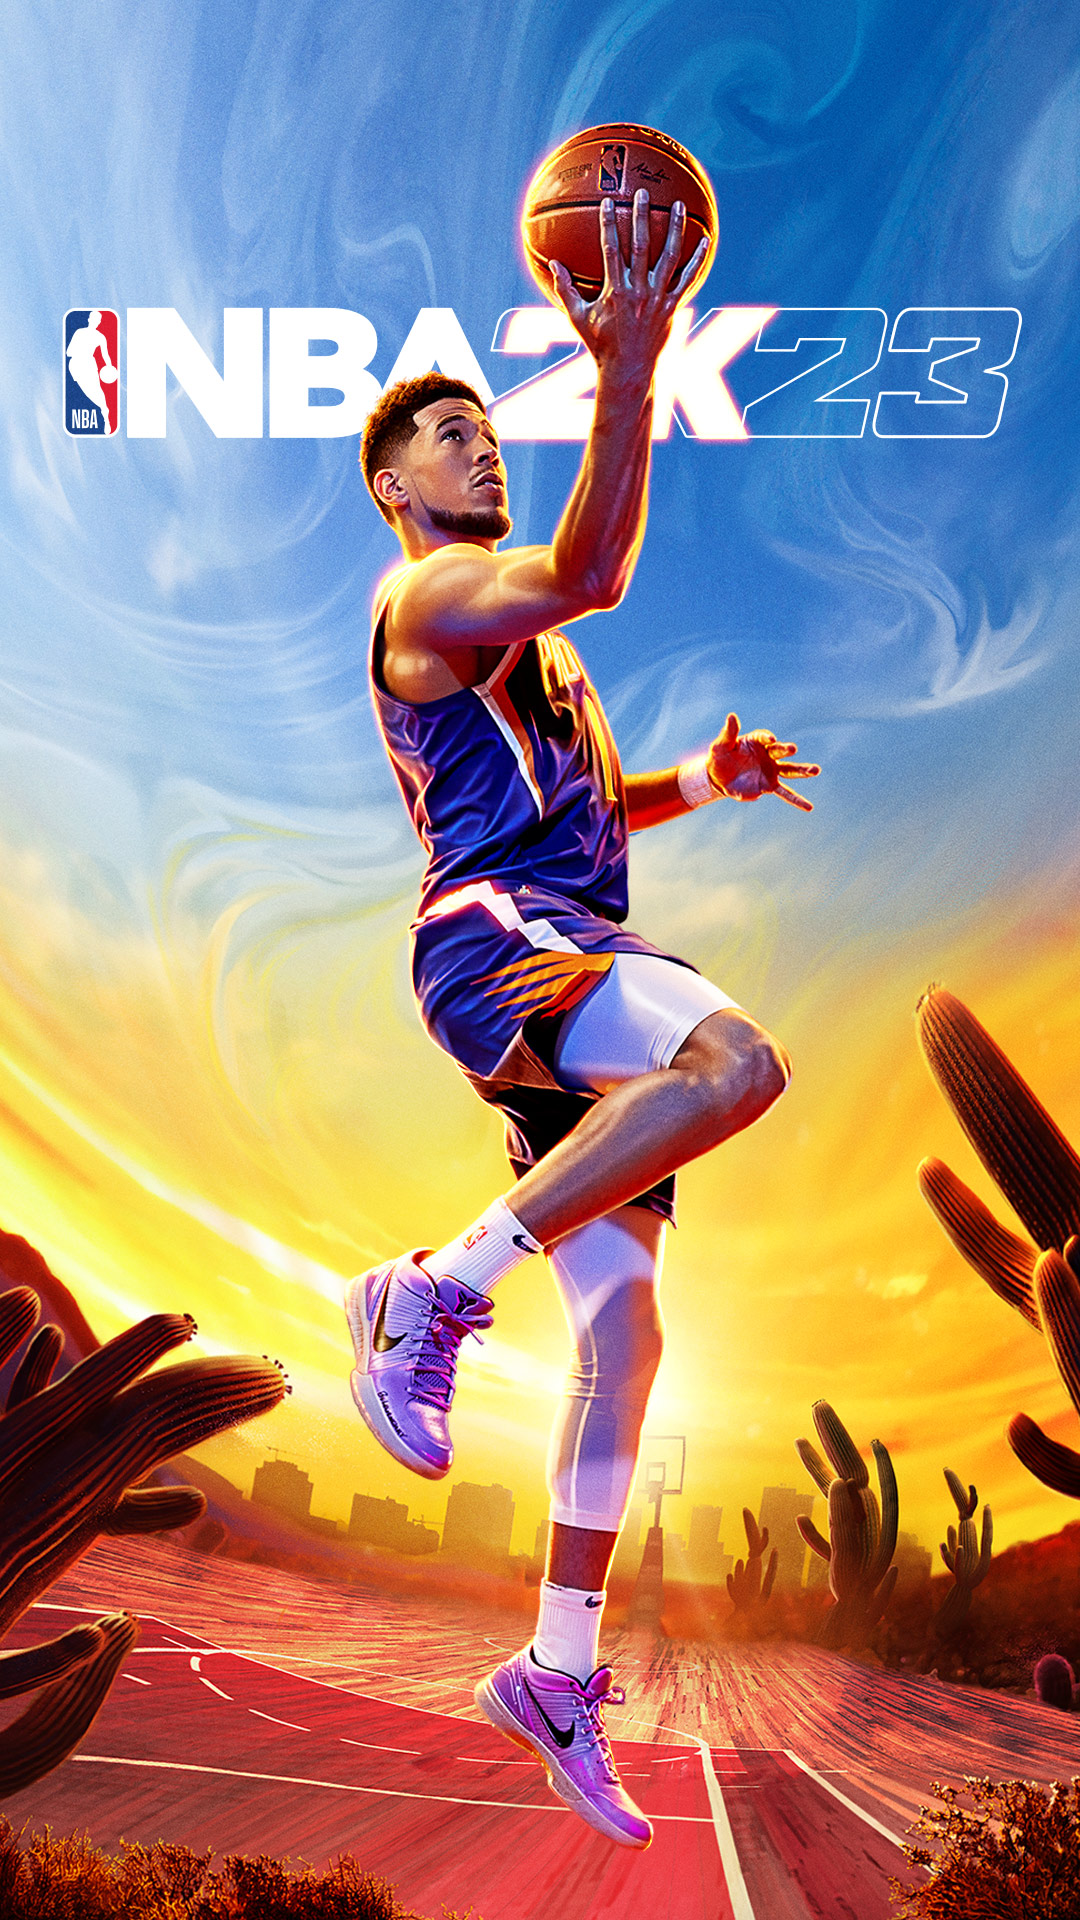 NBA 2K23 Championship Edition - Xbox One